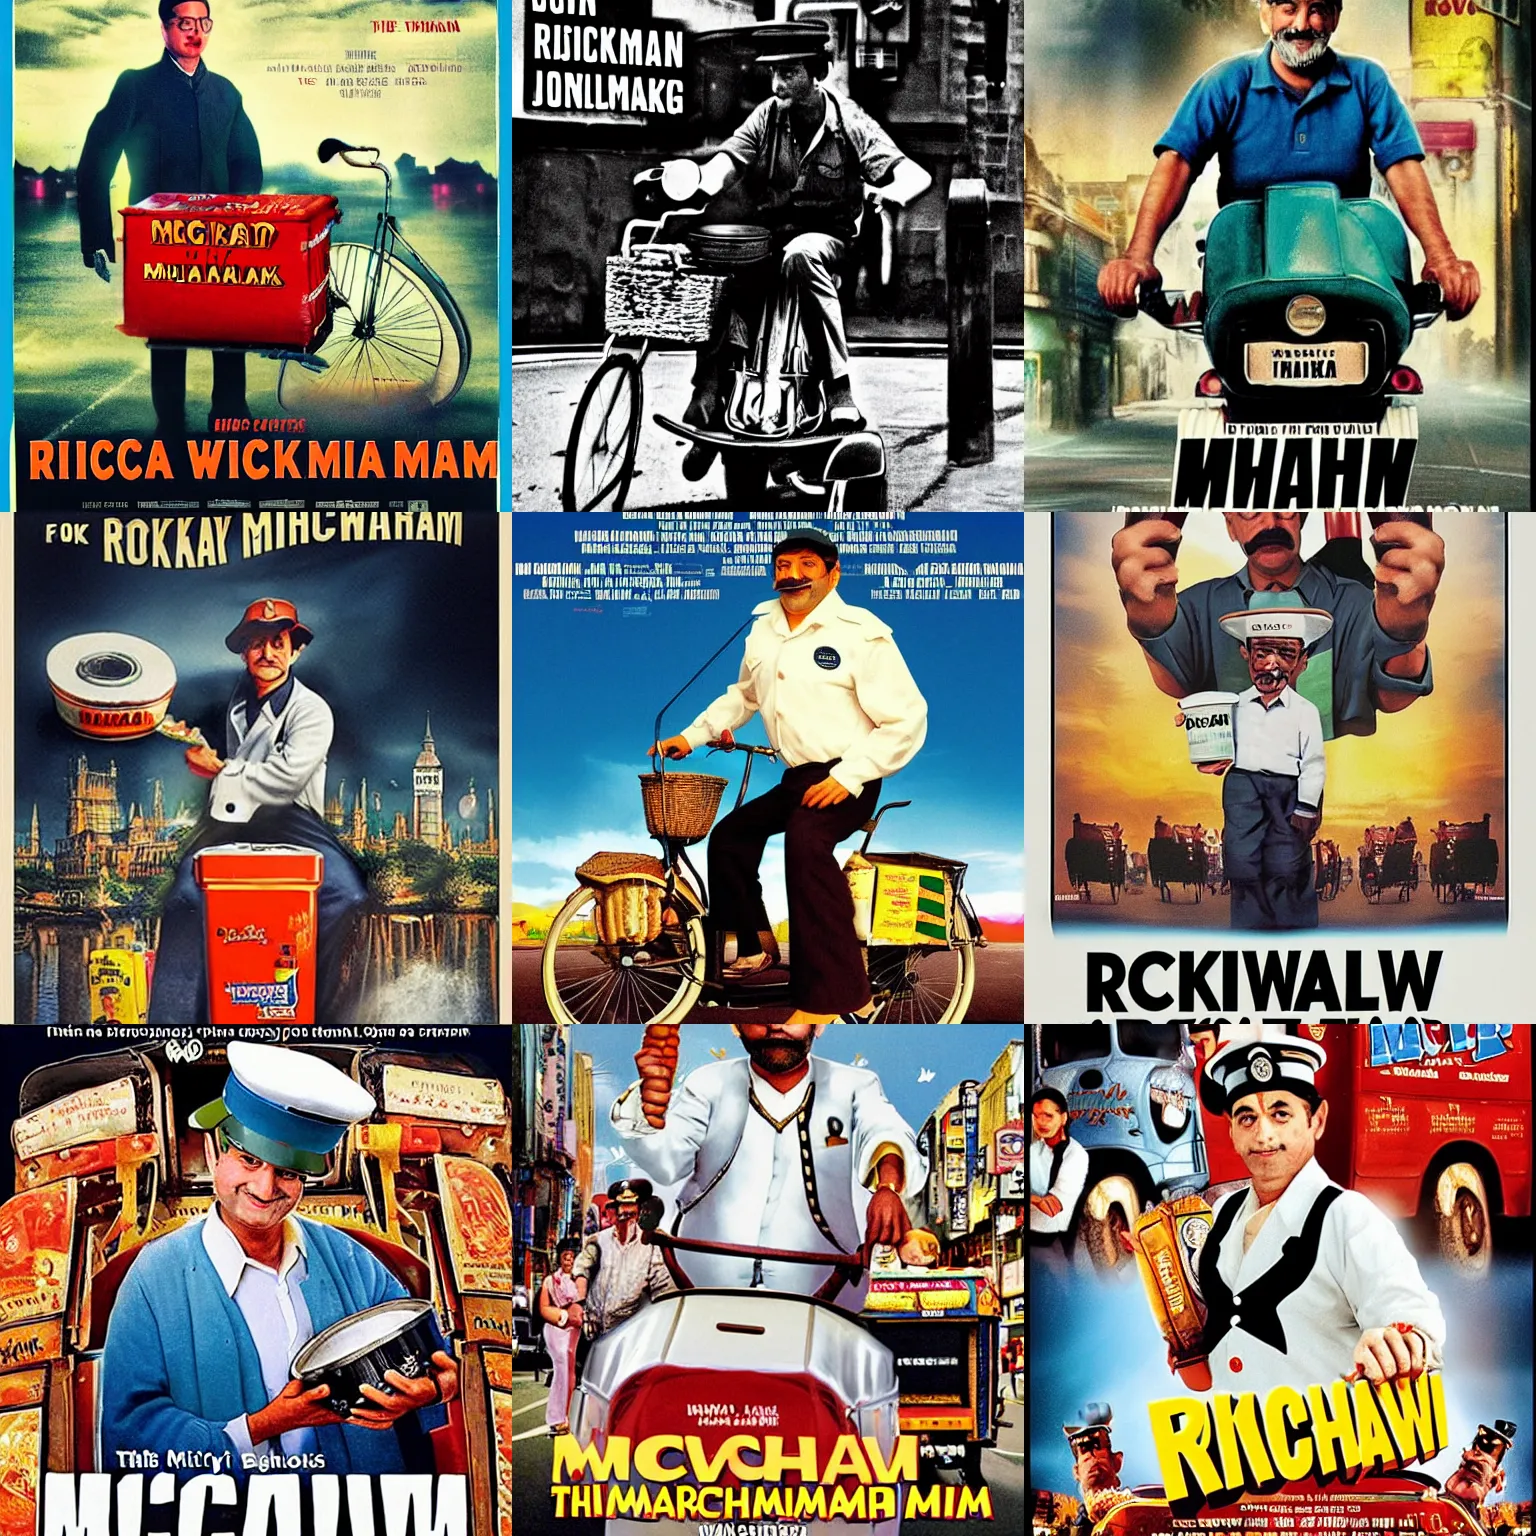 Prompt: Movie Poster for The Rickshaw Milkman Returns (2000)